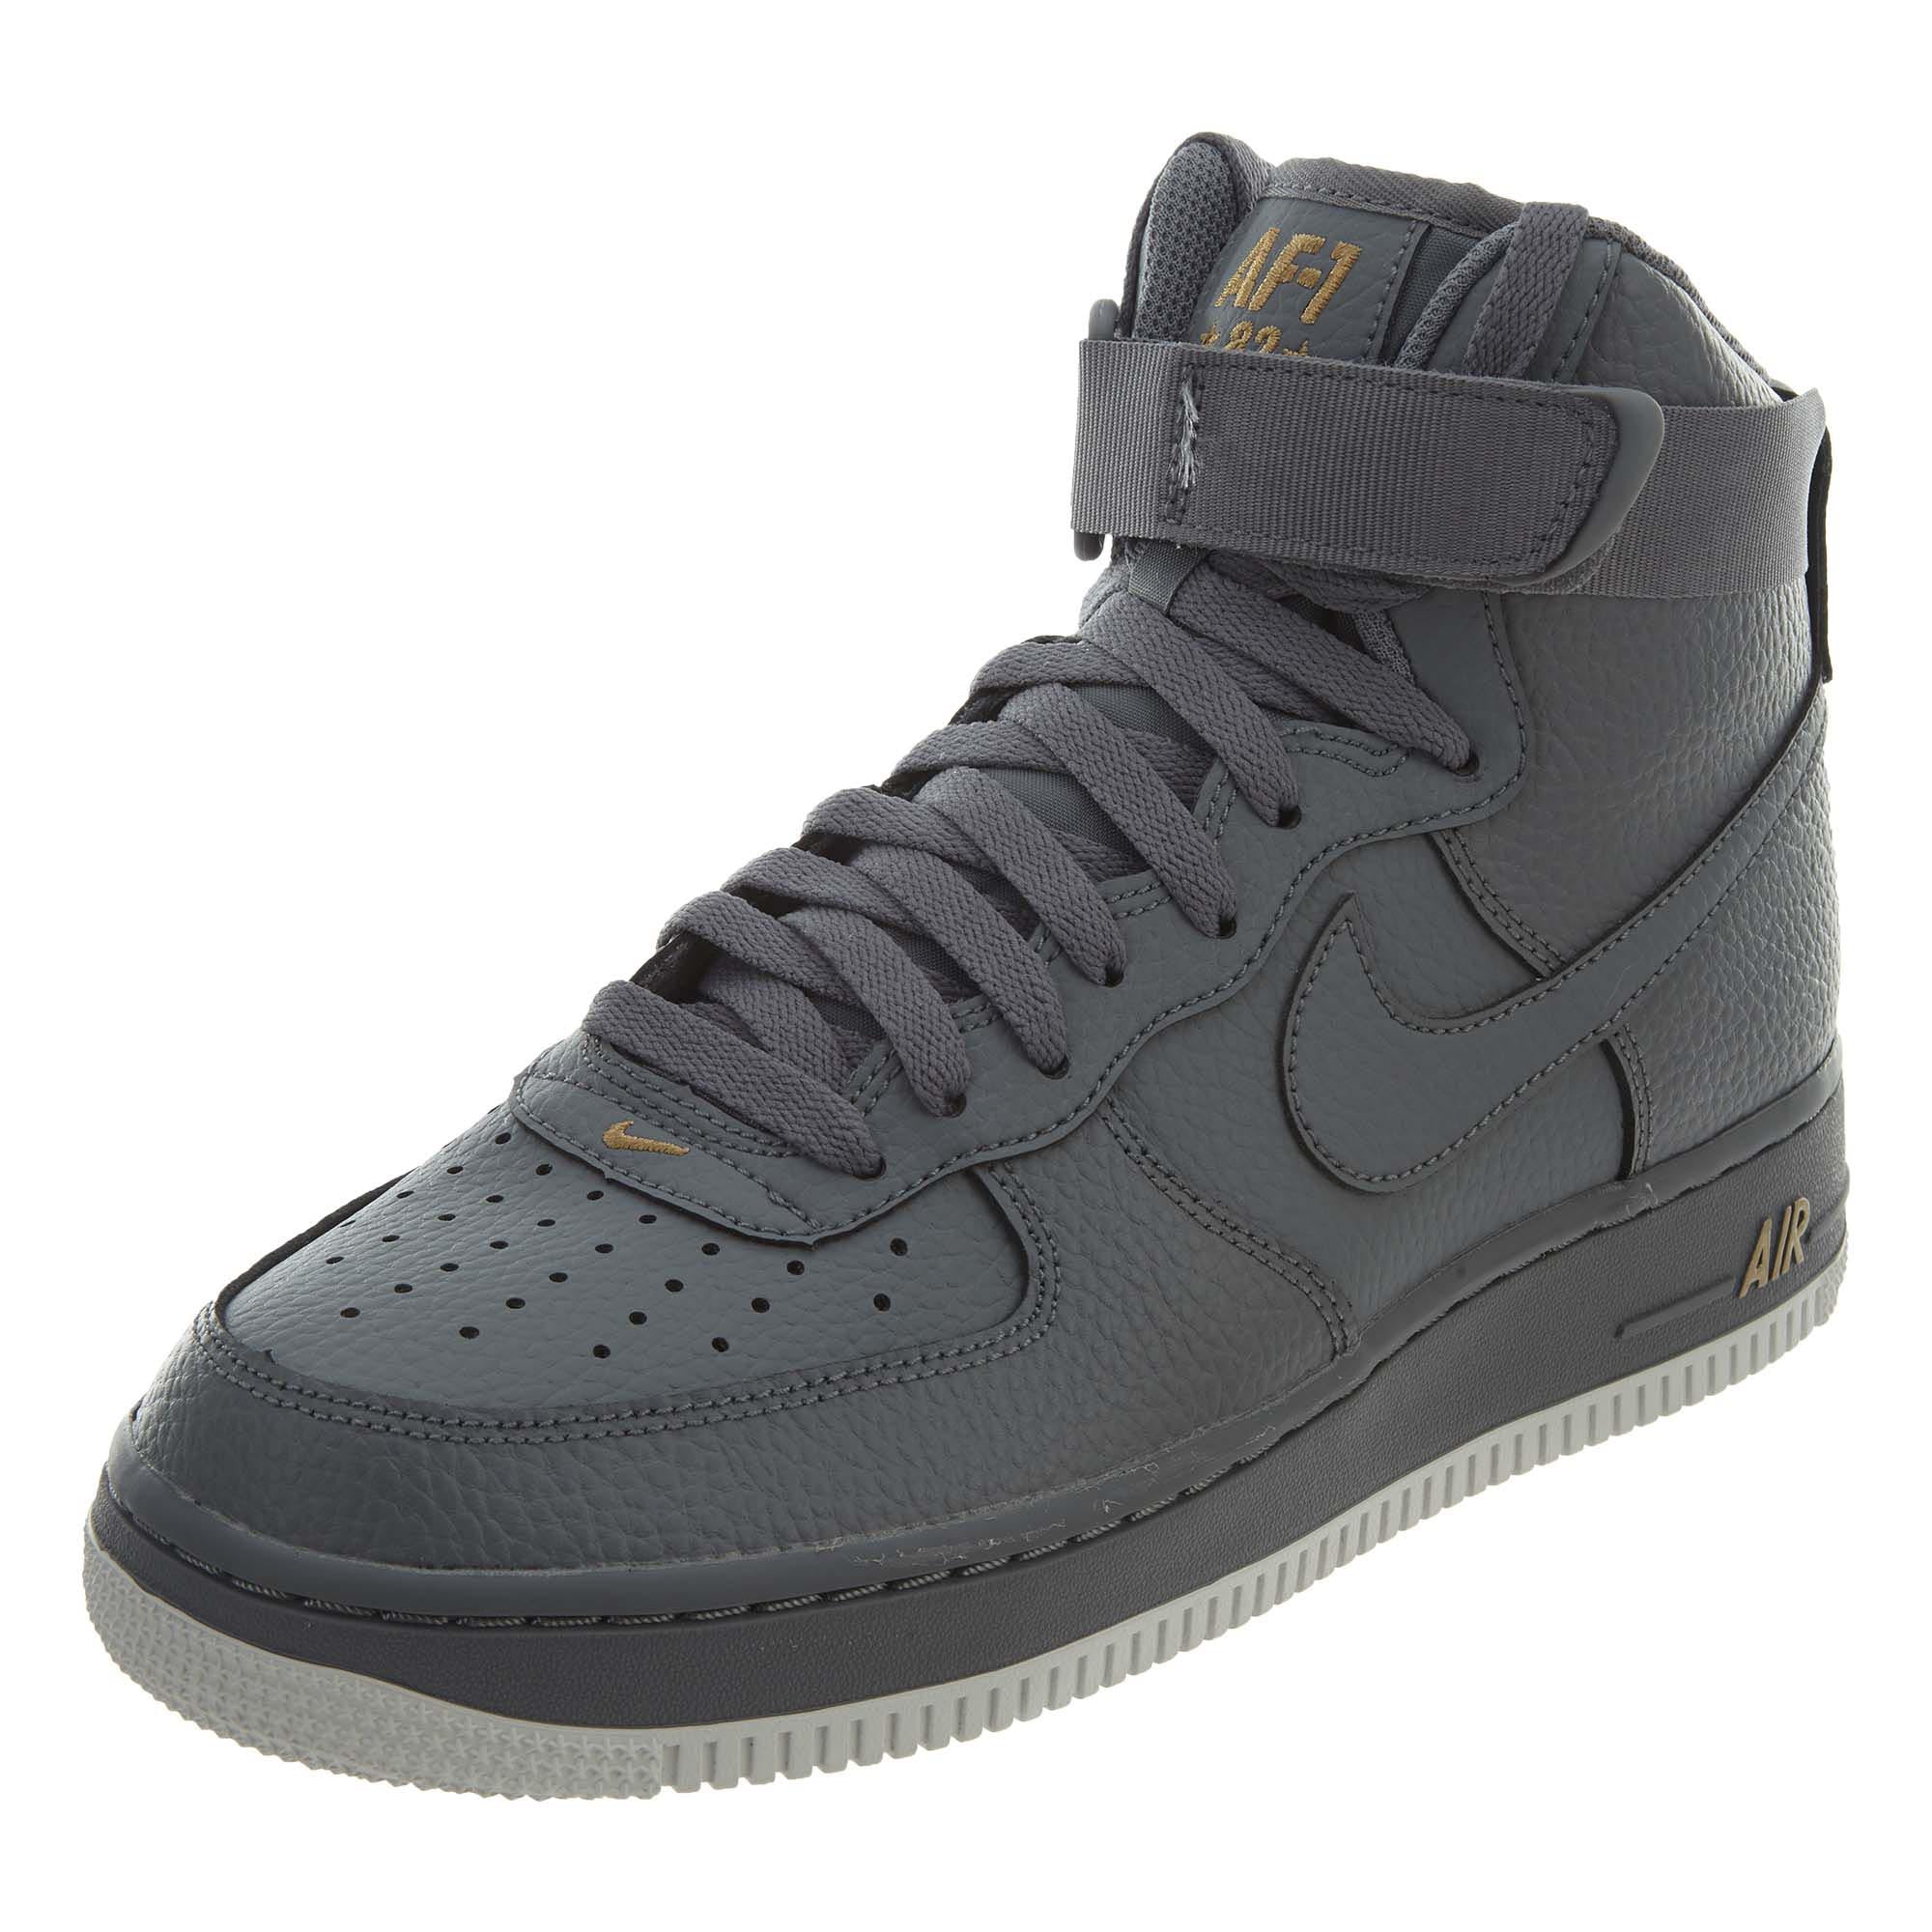 Nike Air Force 1 High '07 Mens Sneaker Style # 315121-049